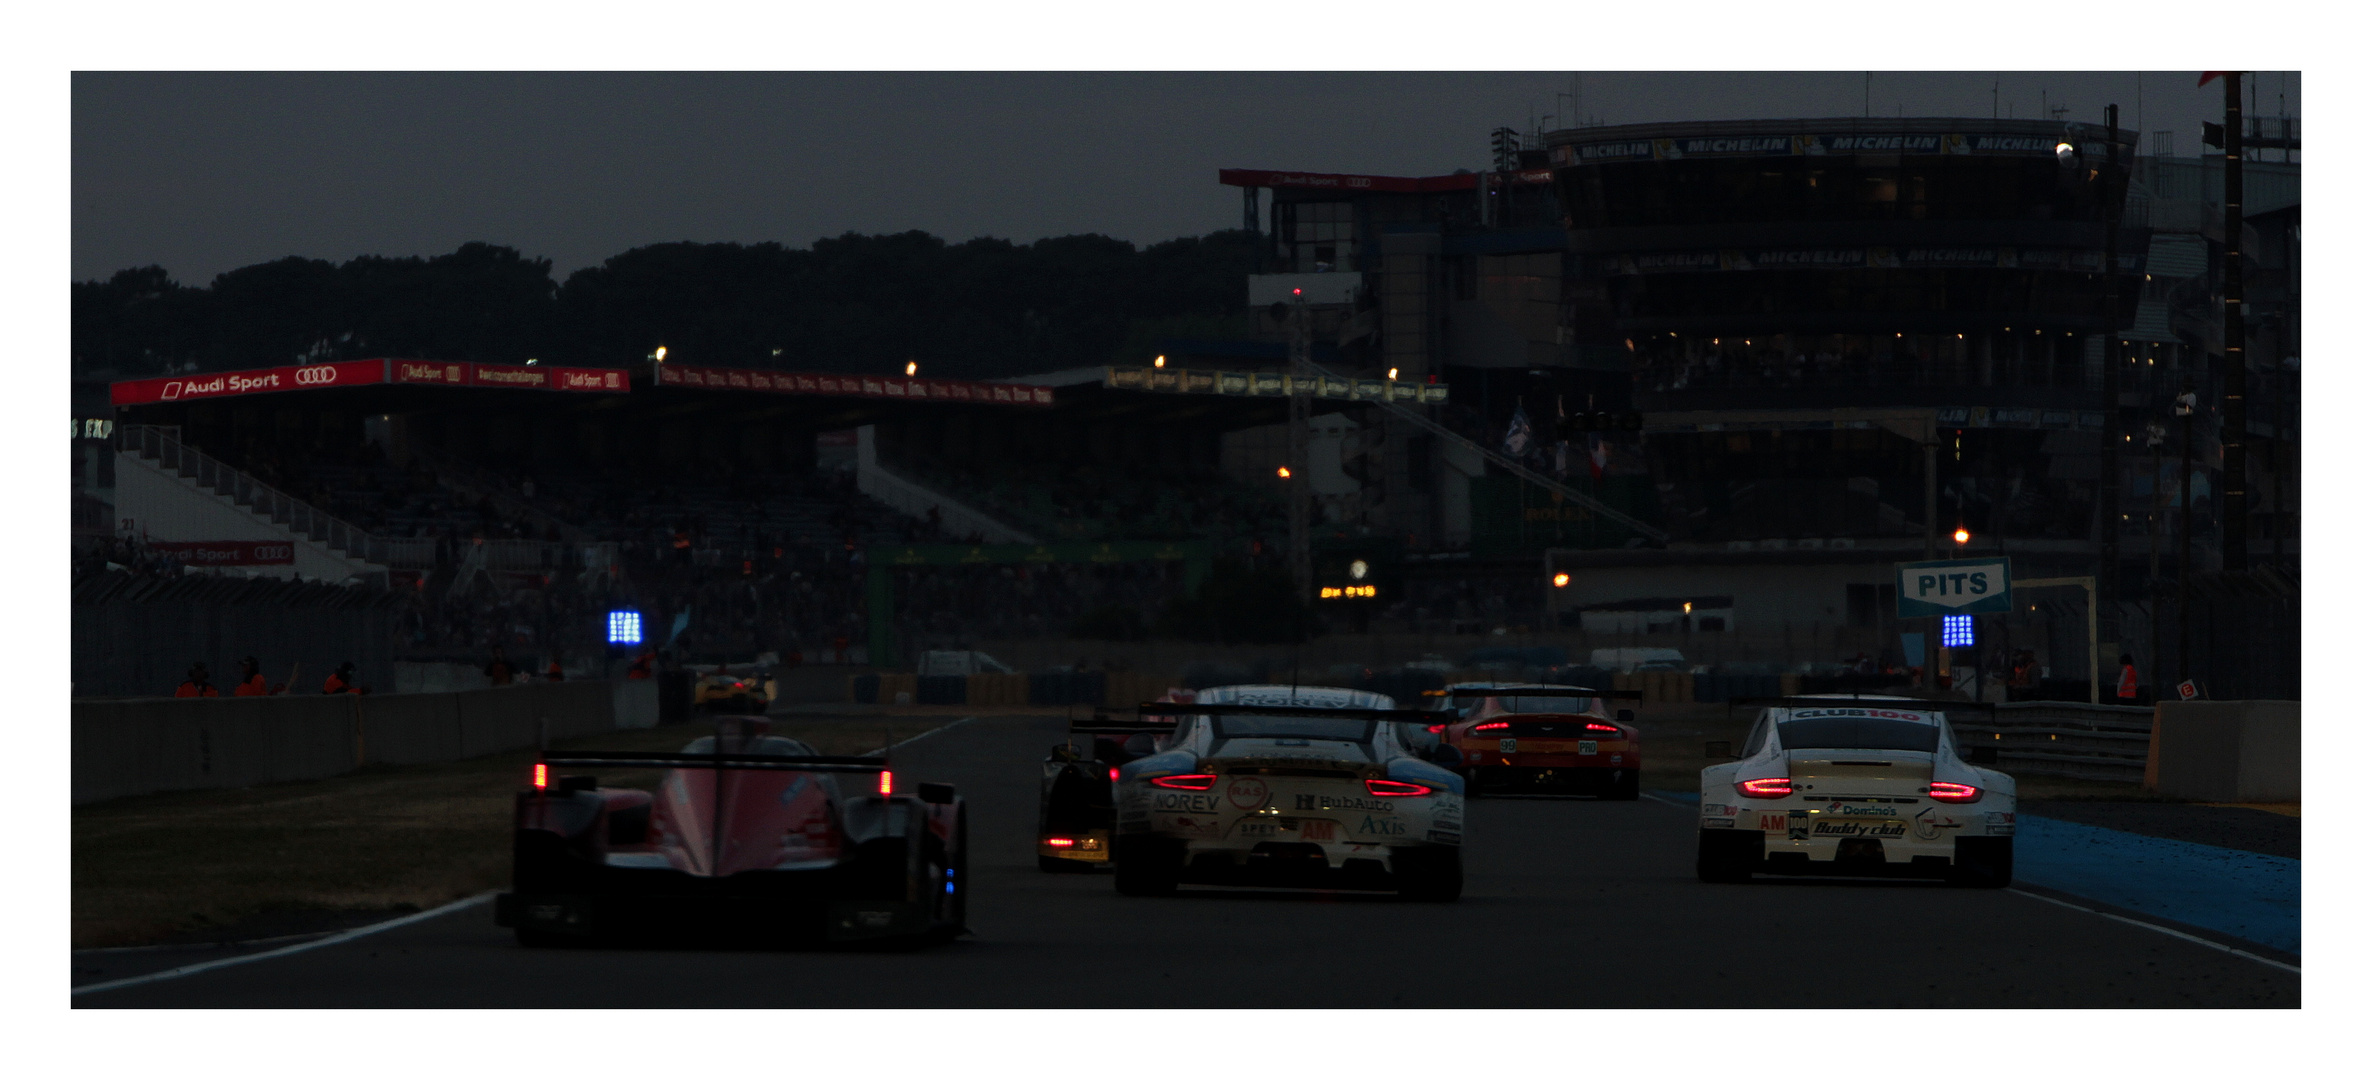 Le Mans @ night